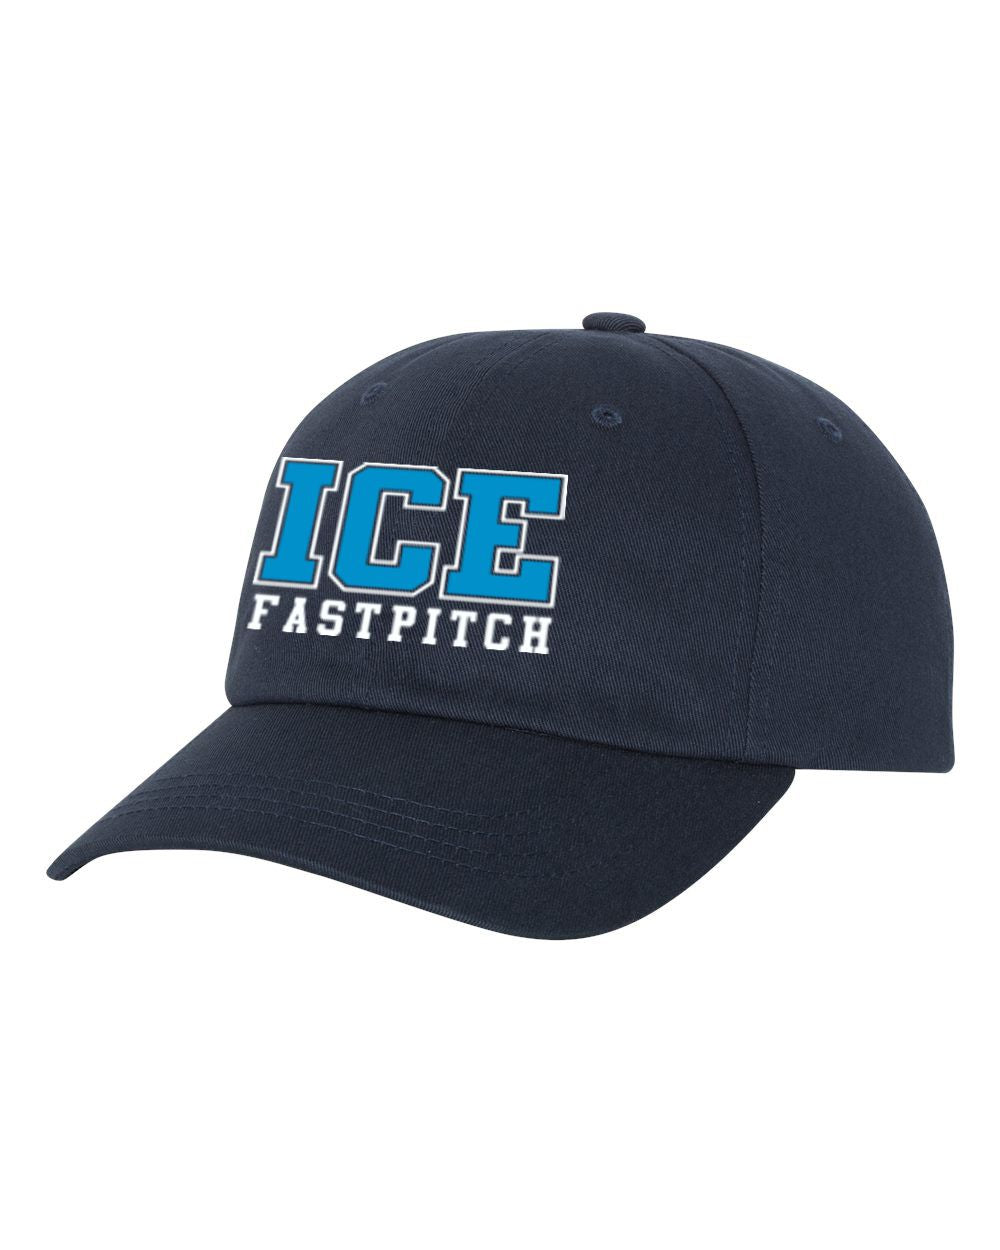 ICE Fastpitch Classic Dad’s Cap